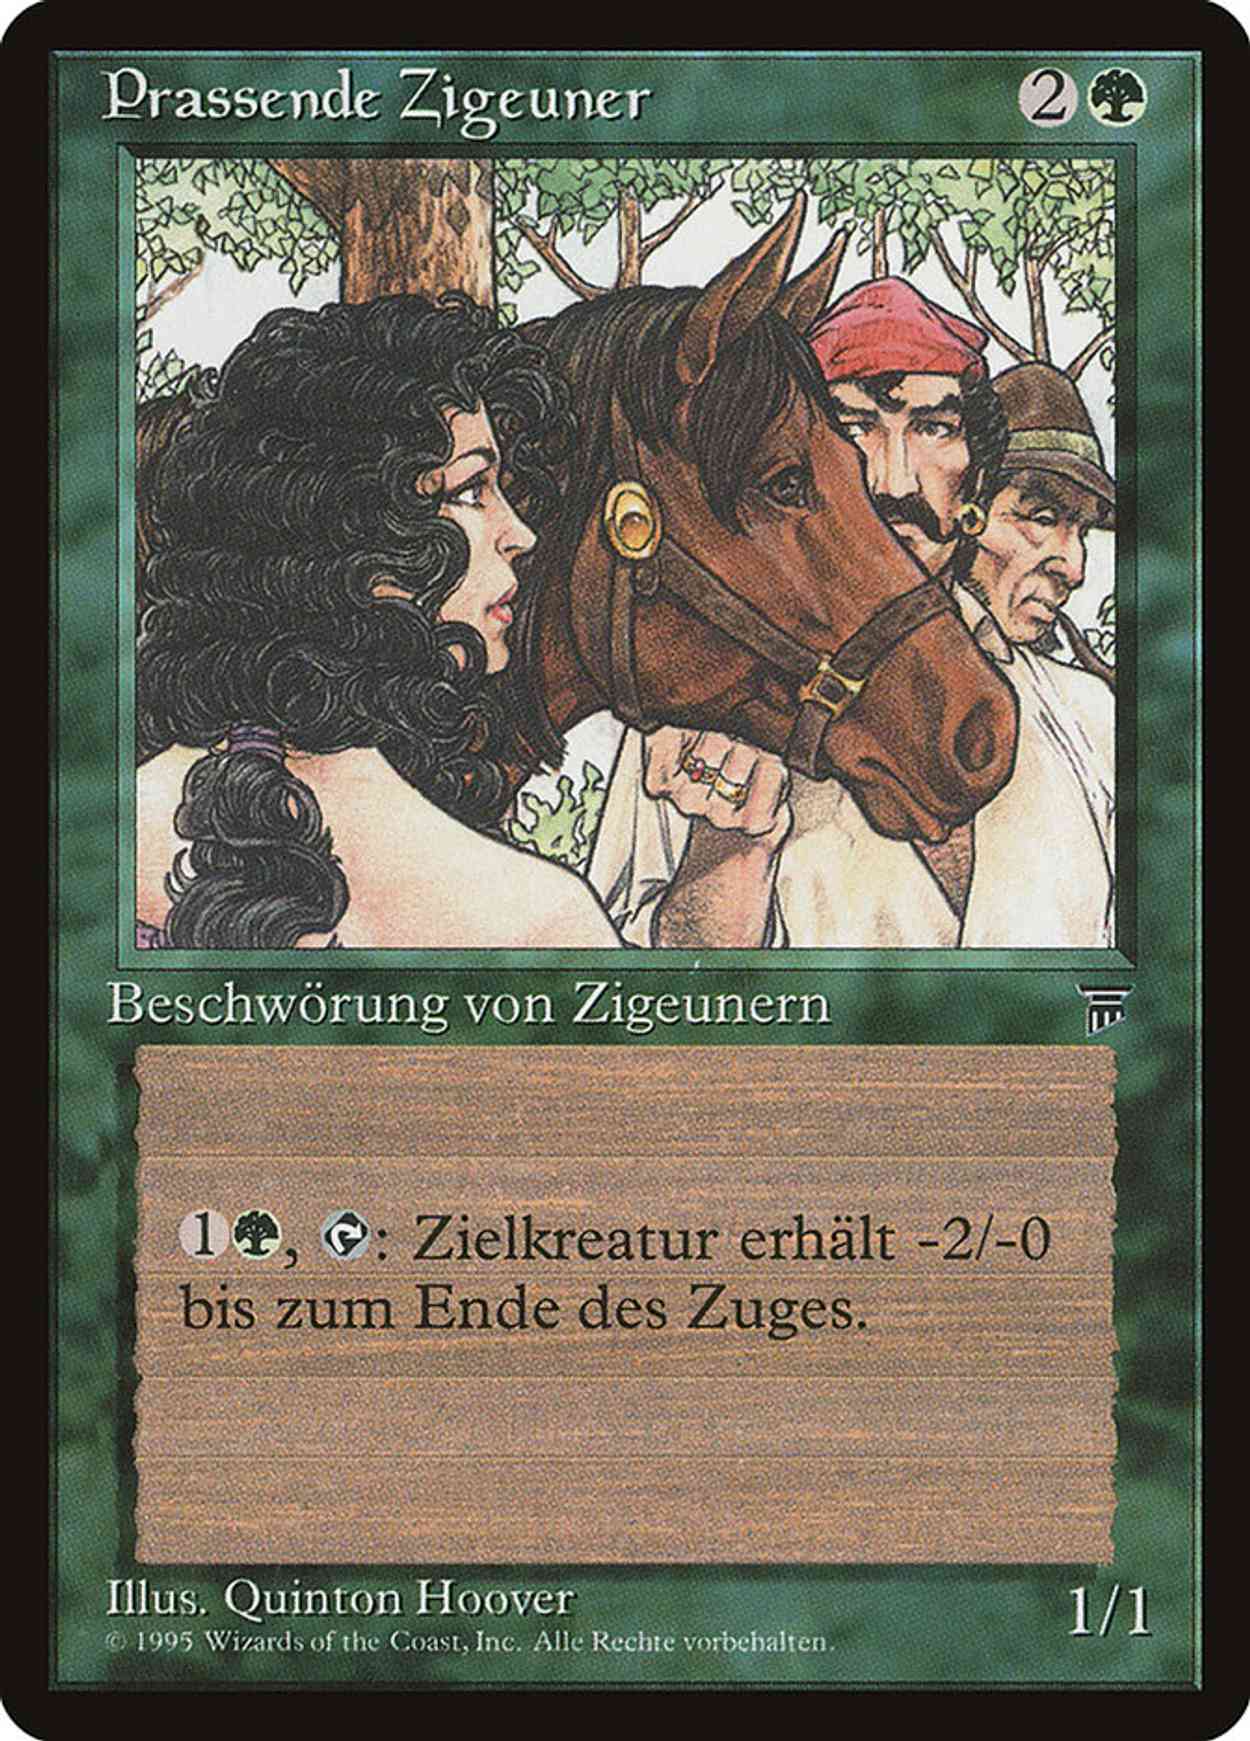 Pradesh Gypsies (German) - "Prassende Zigeuner" magic card front